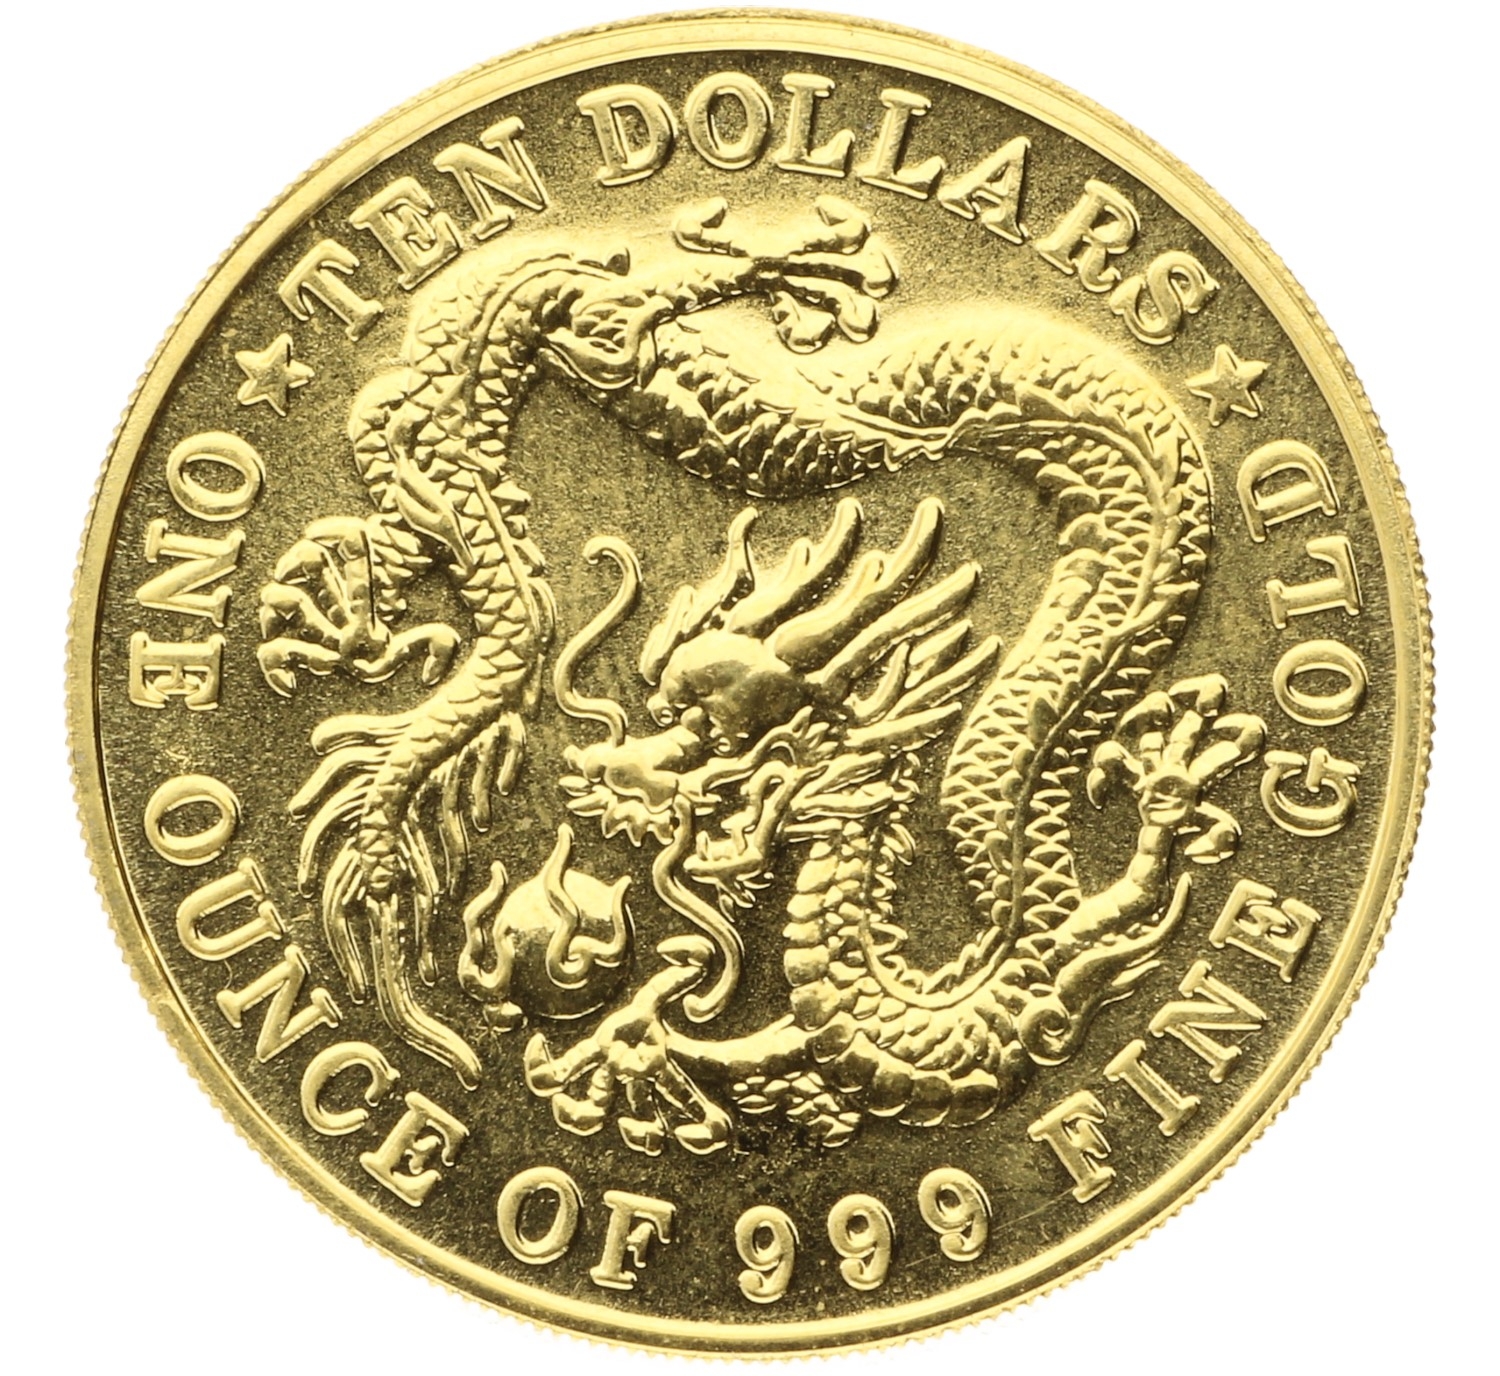 10 Dollars - Singapore - 1984